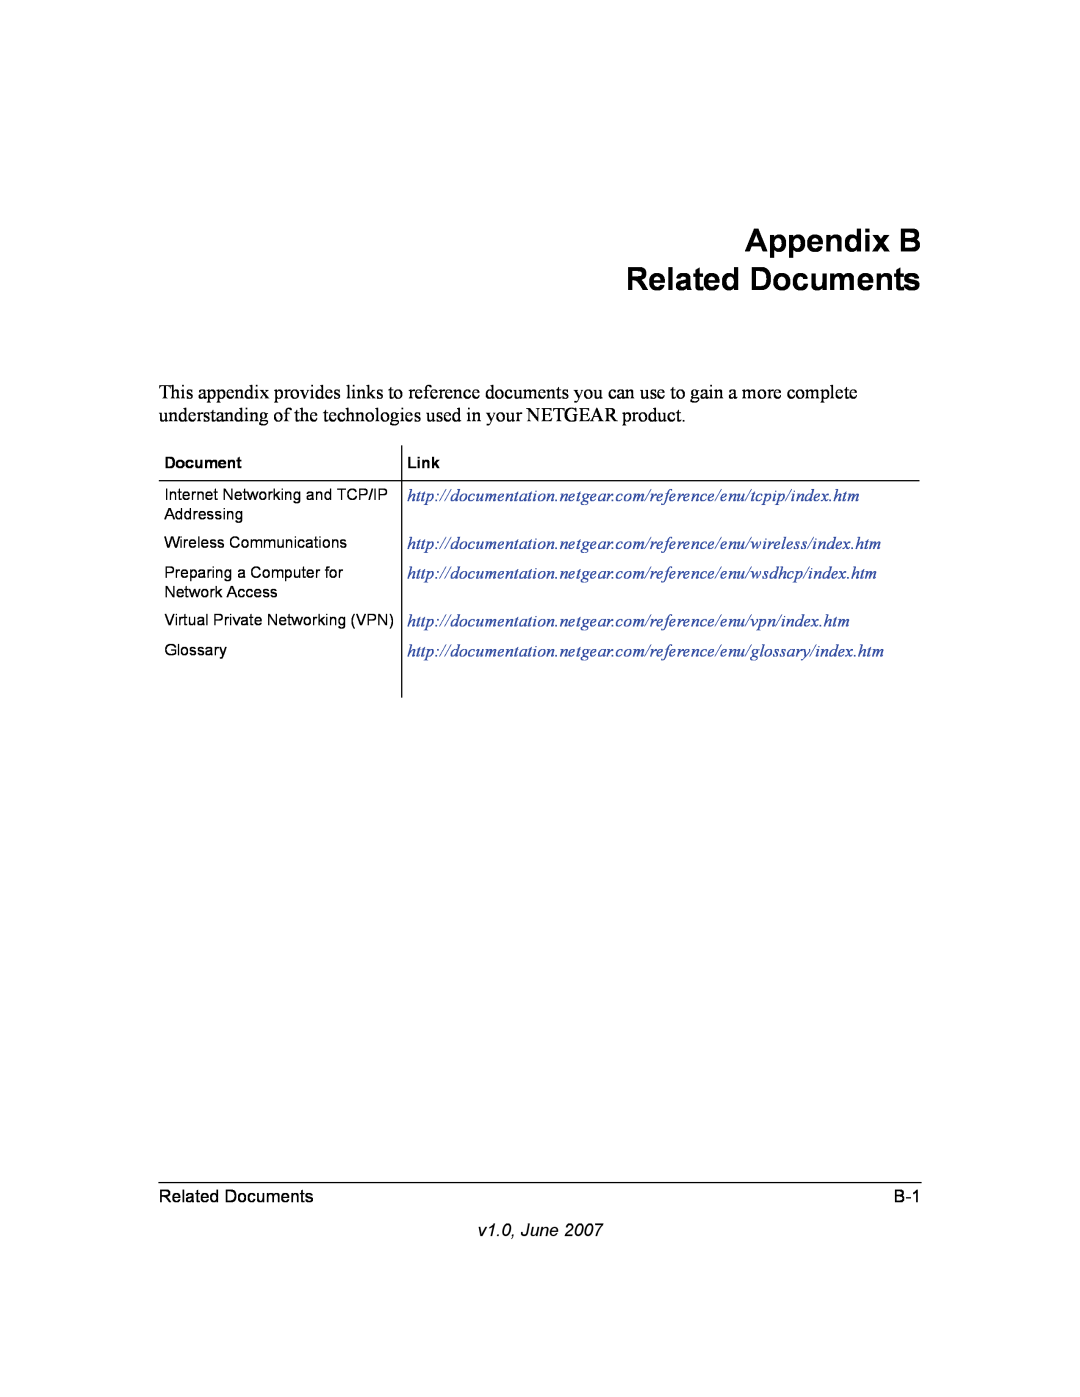 NETGEAR WG602V4 Appendix B Related Documents, http//documentation.netgear.com/reference/enu/tcpip/index.htm, v1.0, June 